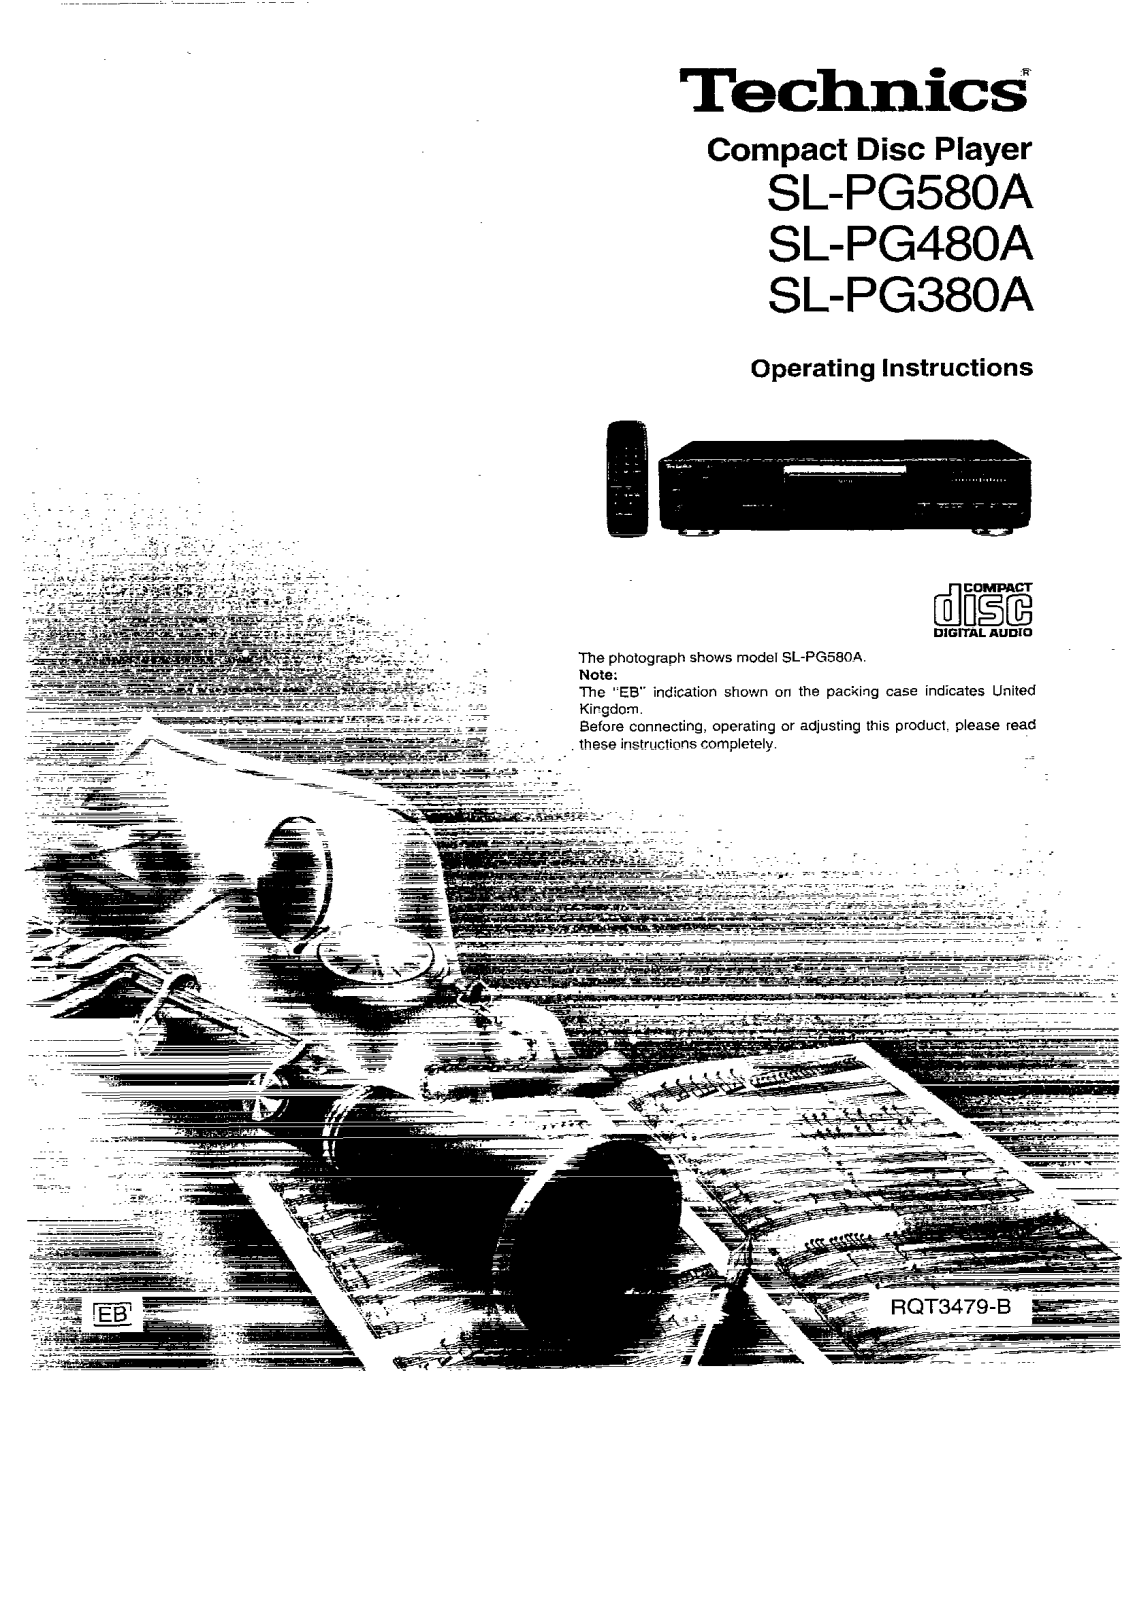 Panasonic SL-PG480A, SL-PG380A, SL-PG580A User Manual